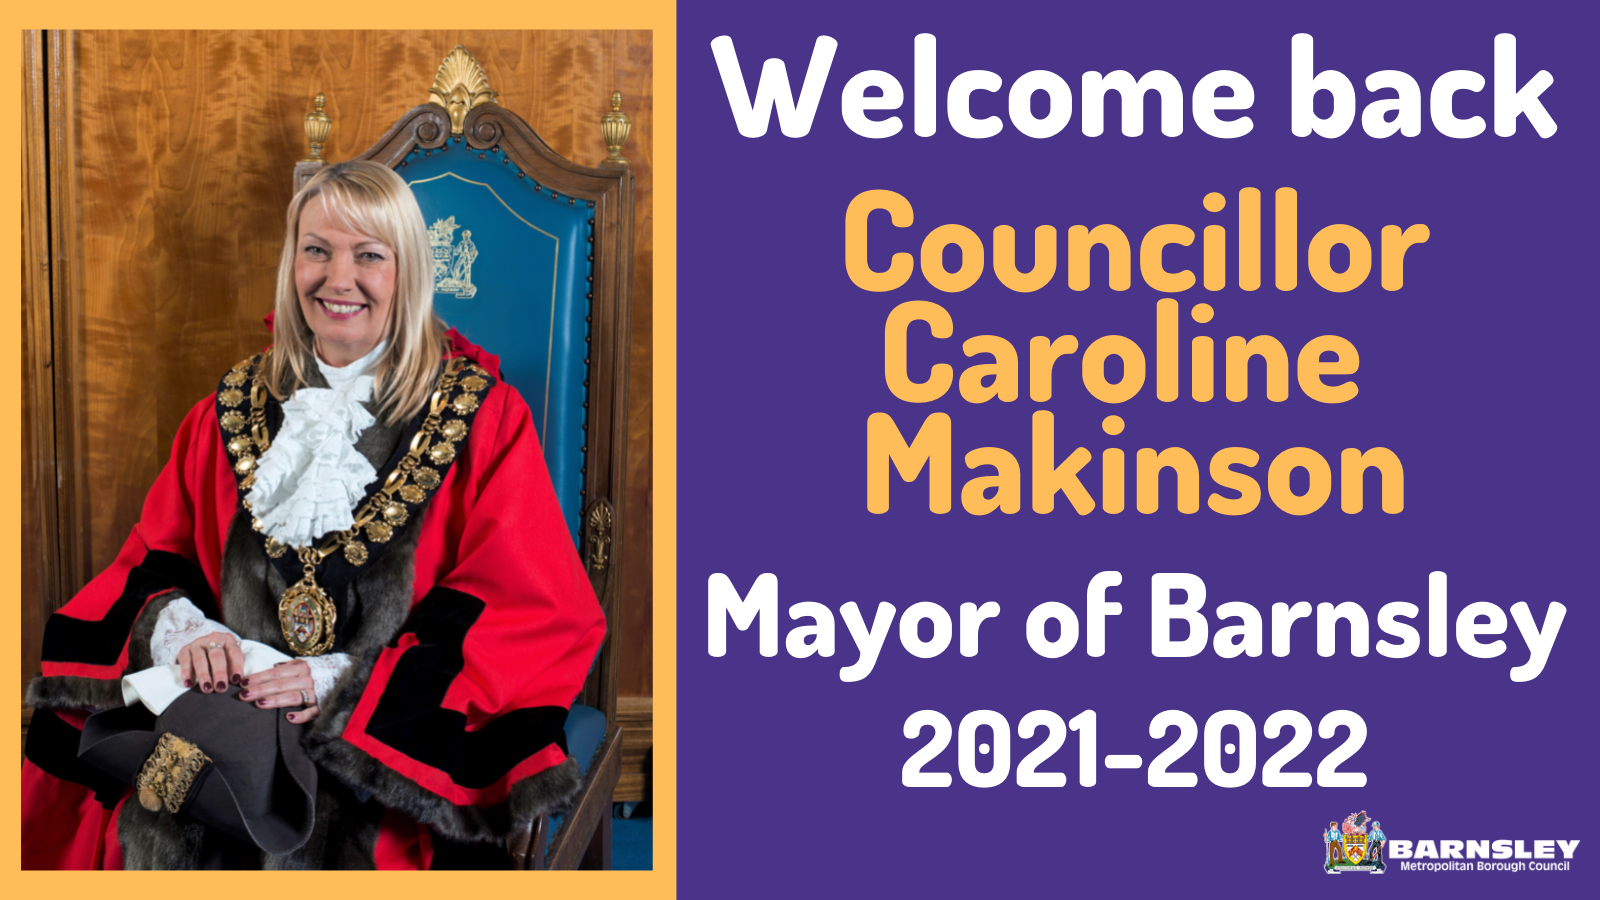 Welcome back Councillor Caroline Makinson - Mayor of Barnsley 2021-2022